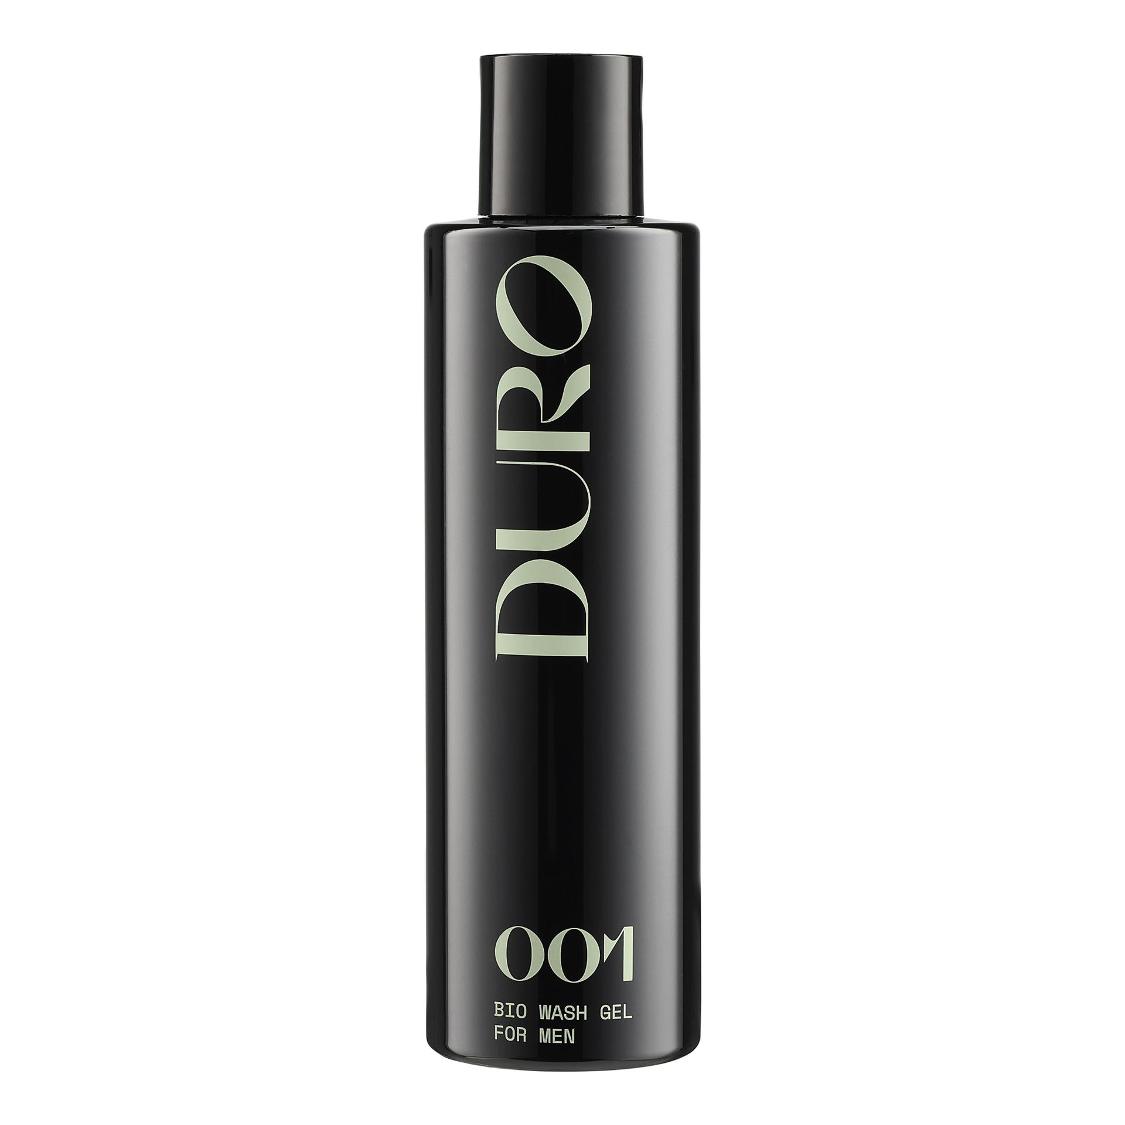 Duro 001 Bio wash gel for men packshot